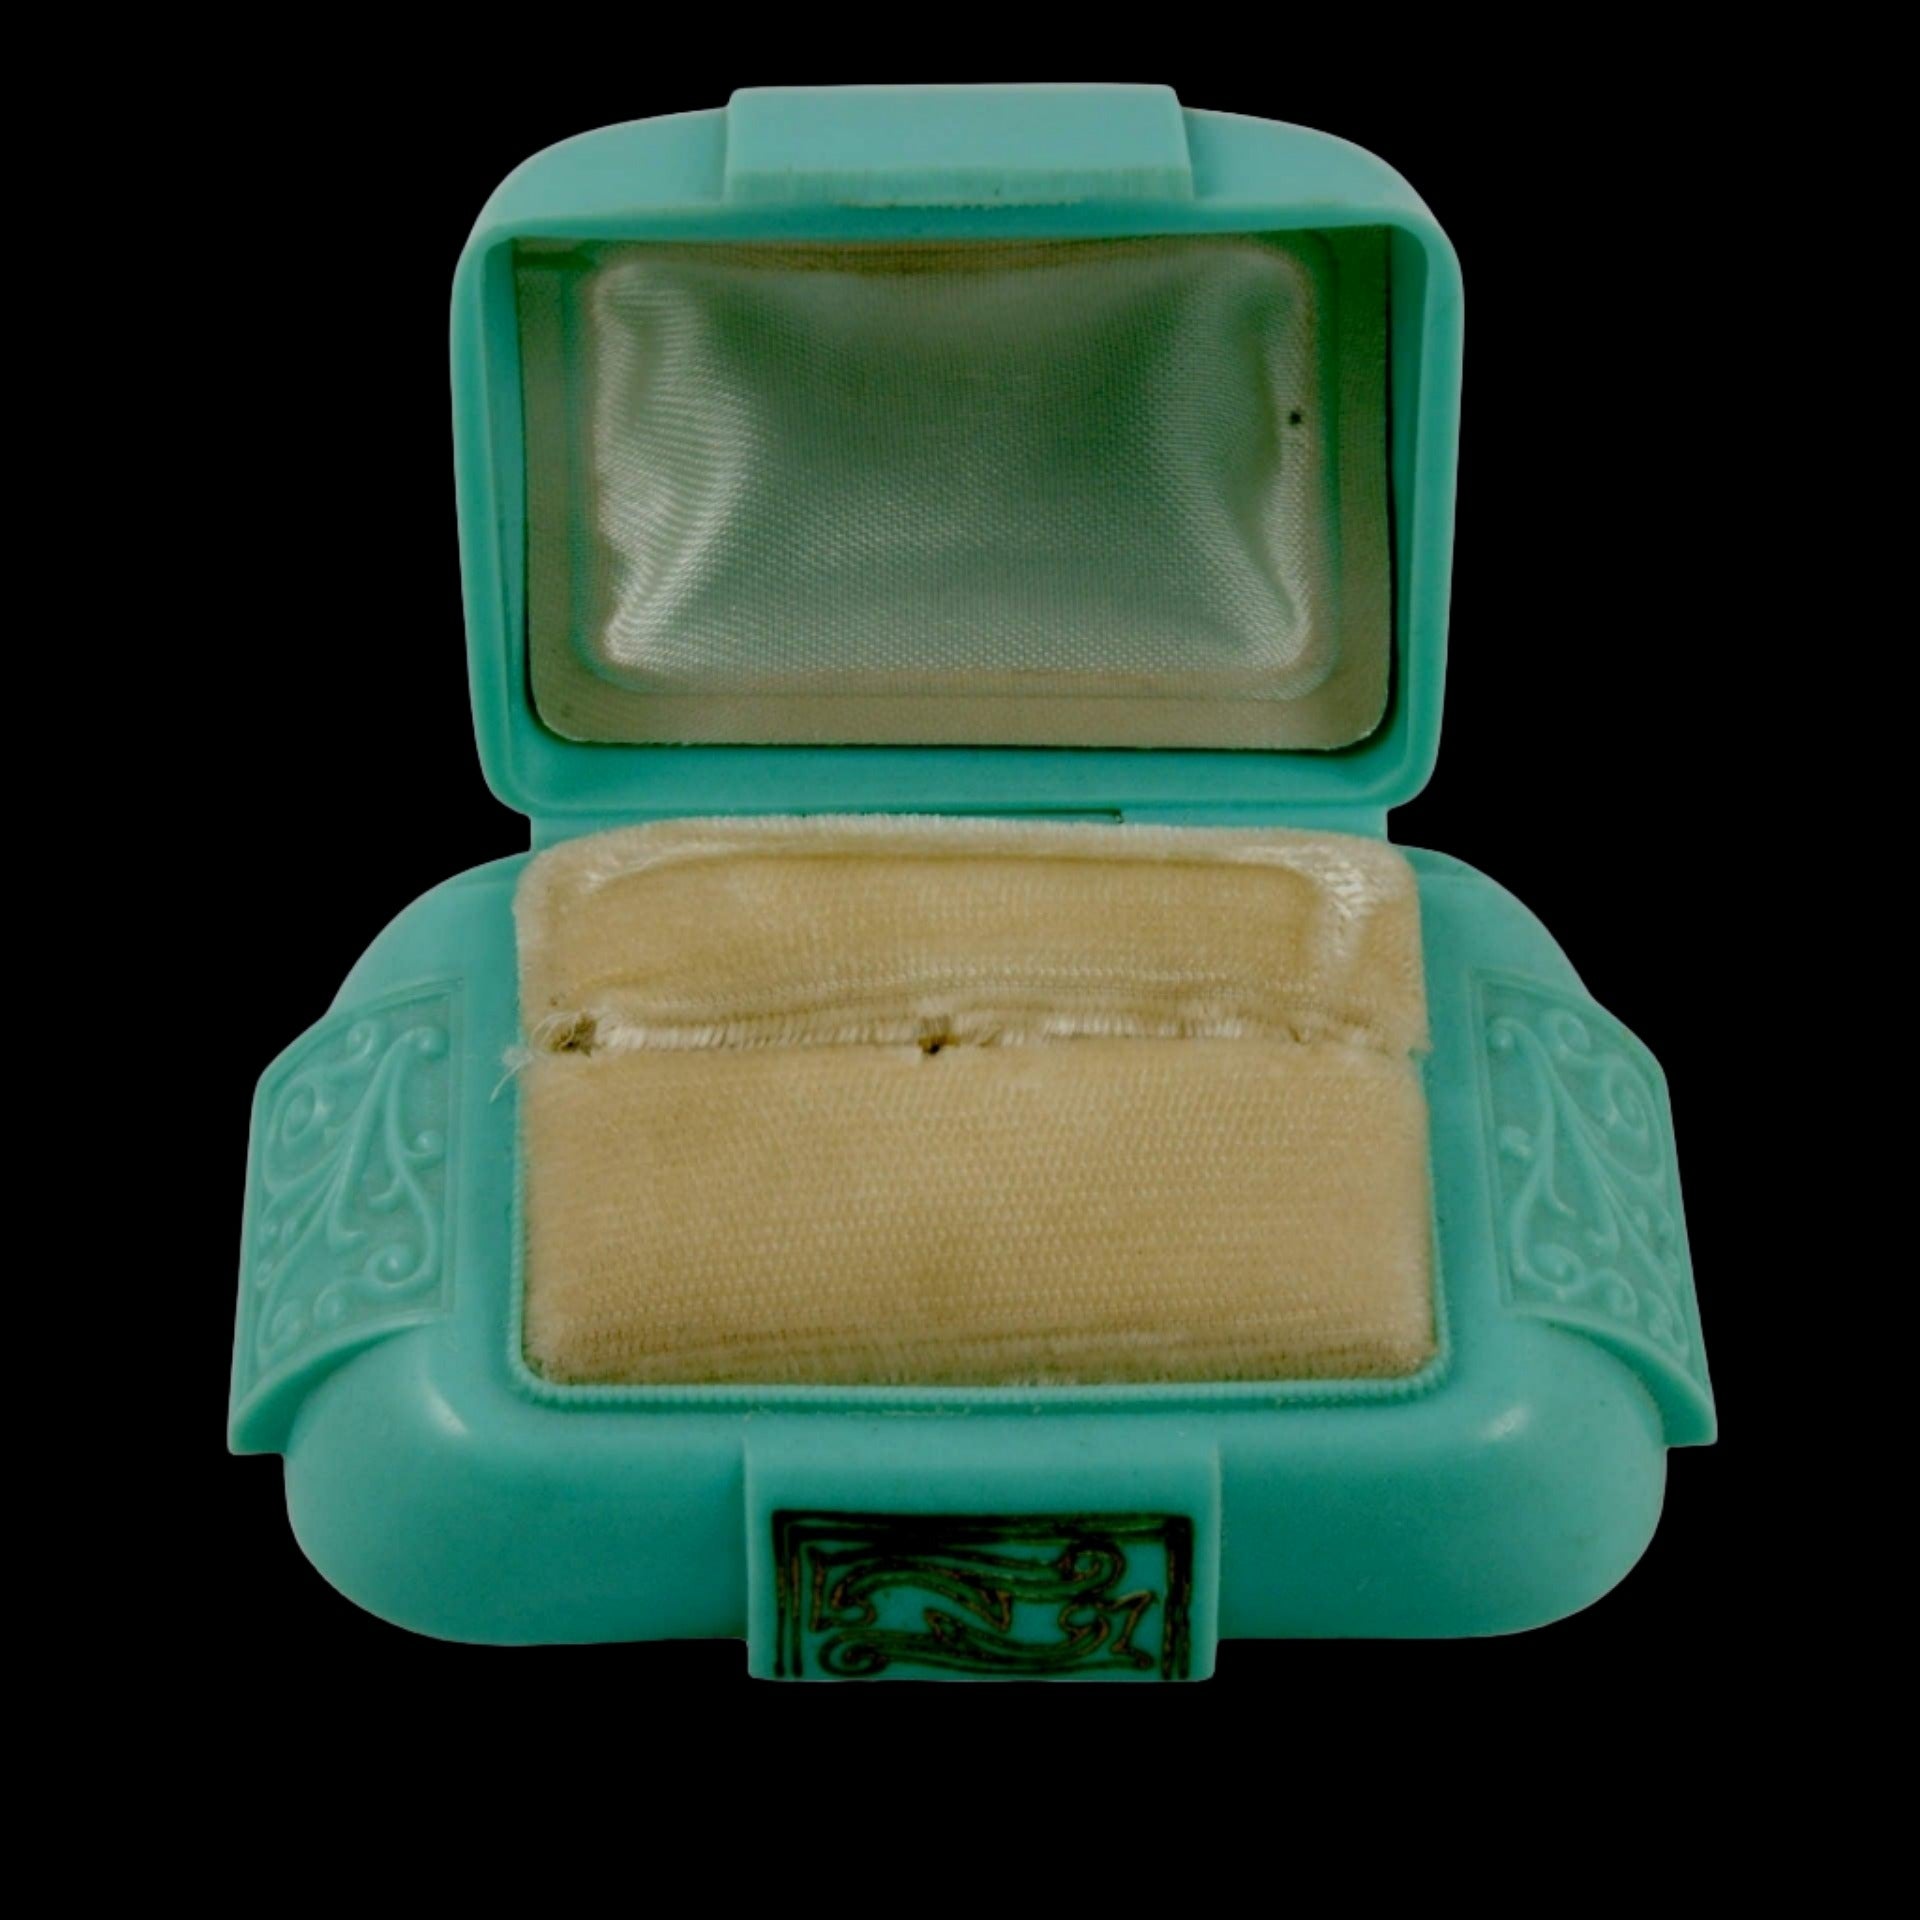 Art Deco Jewelry - Aqua Green Colored Vintage Ring Box